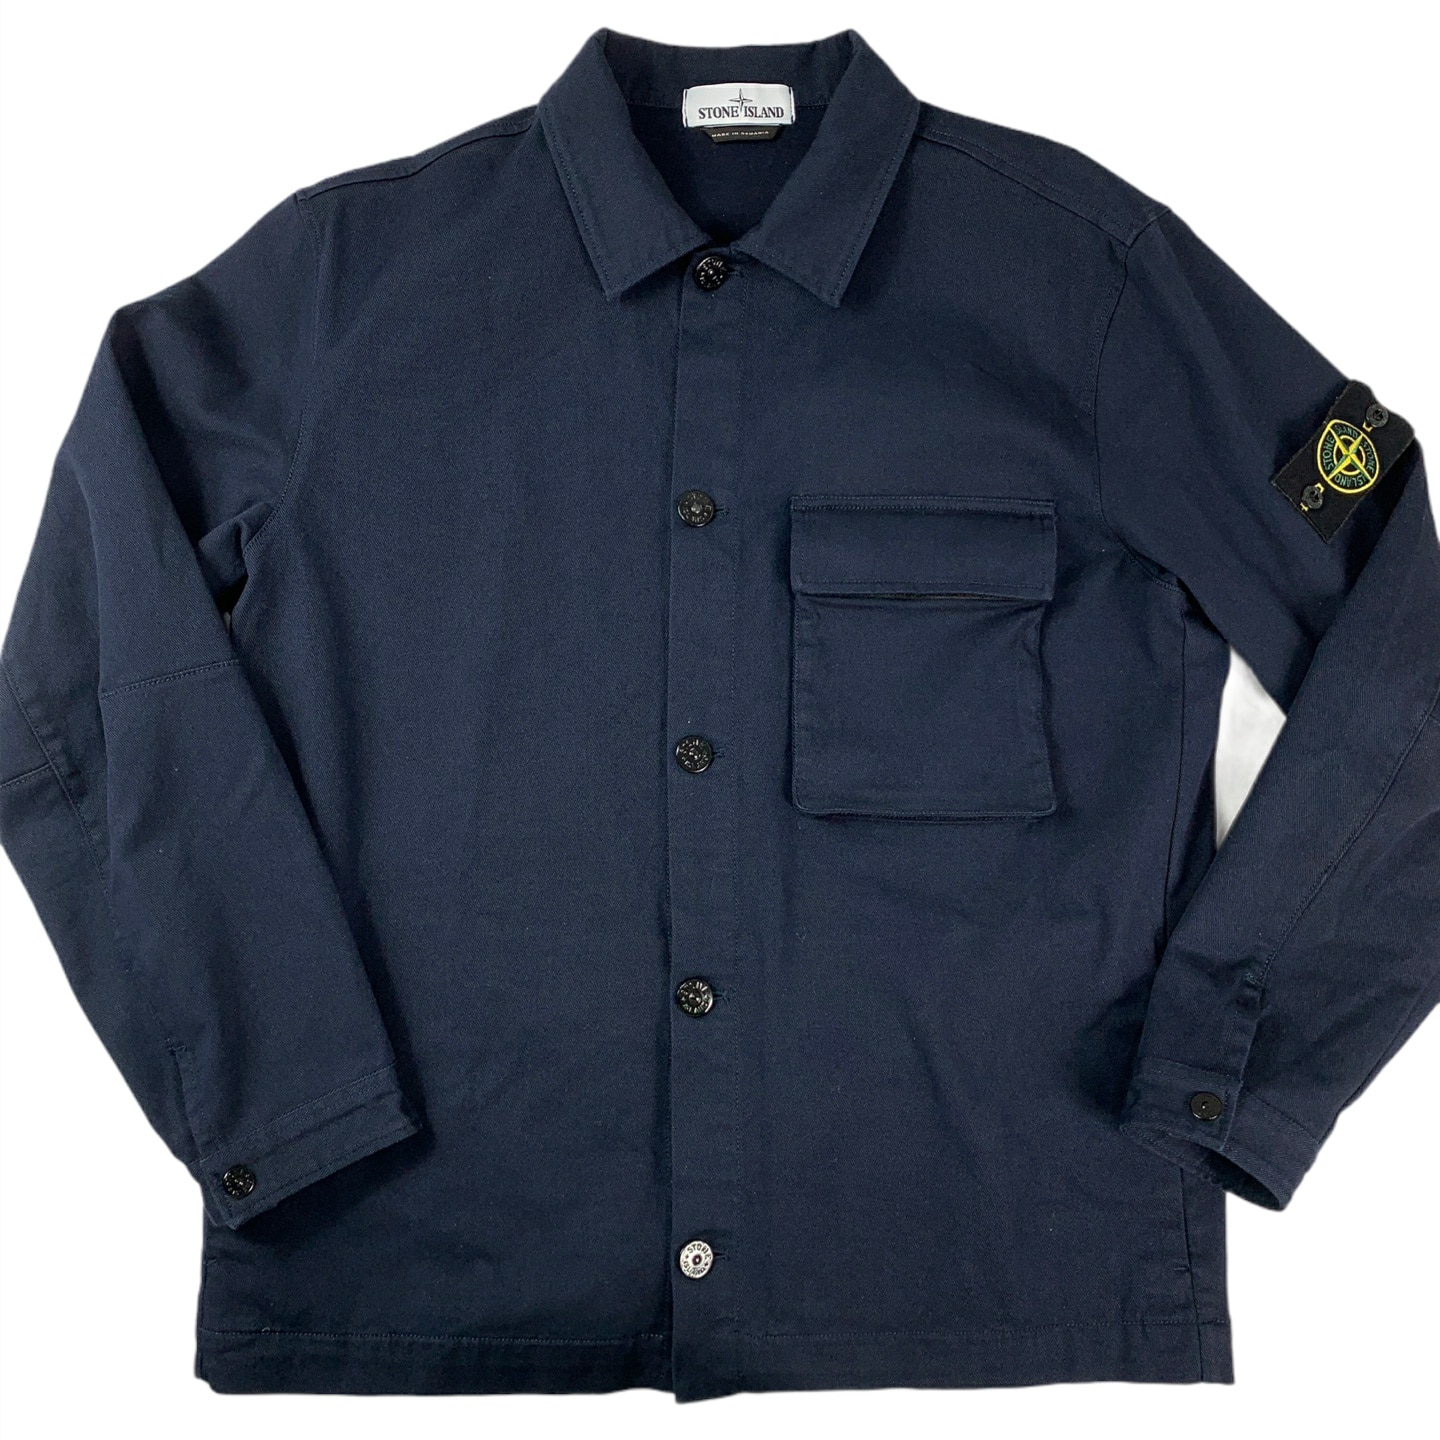 [Stone Island] Pocket Over Shirt Jacket NY - Size L